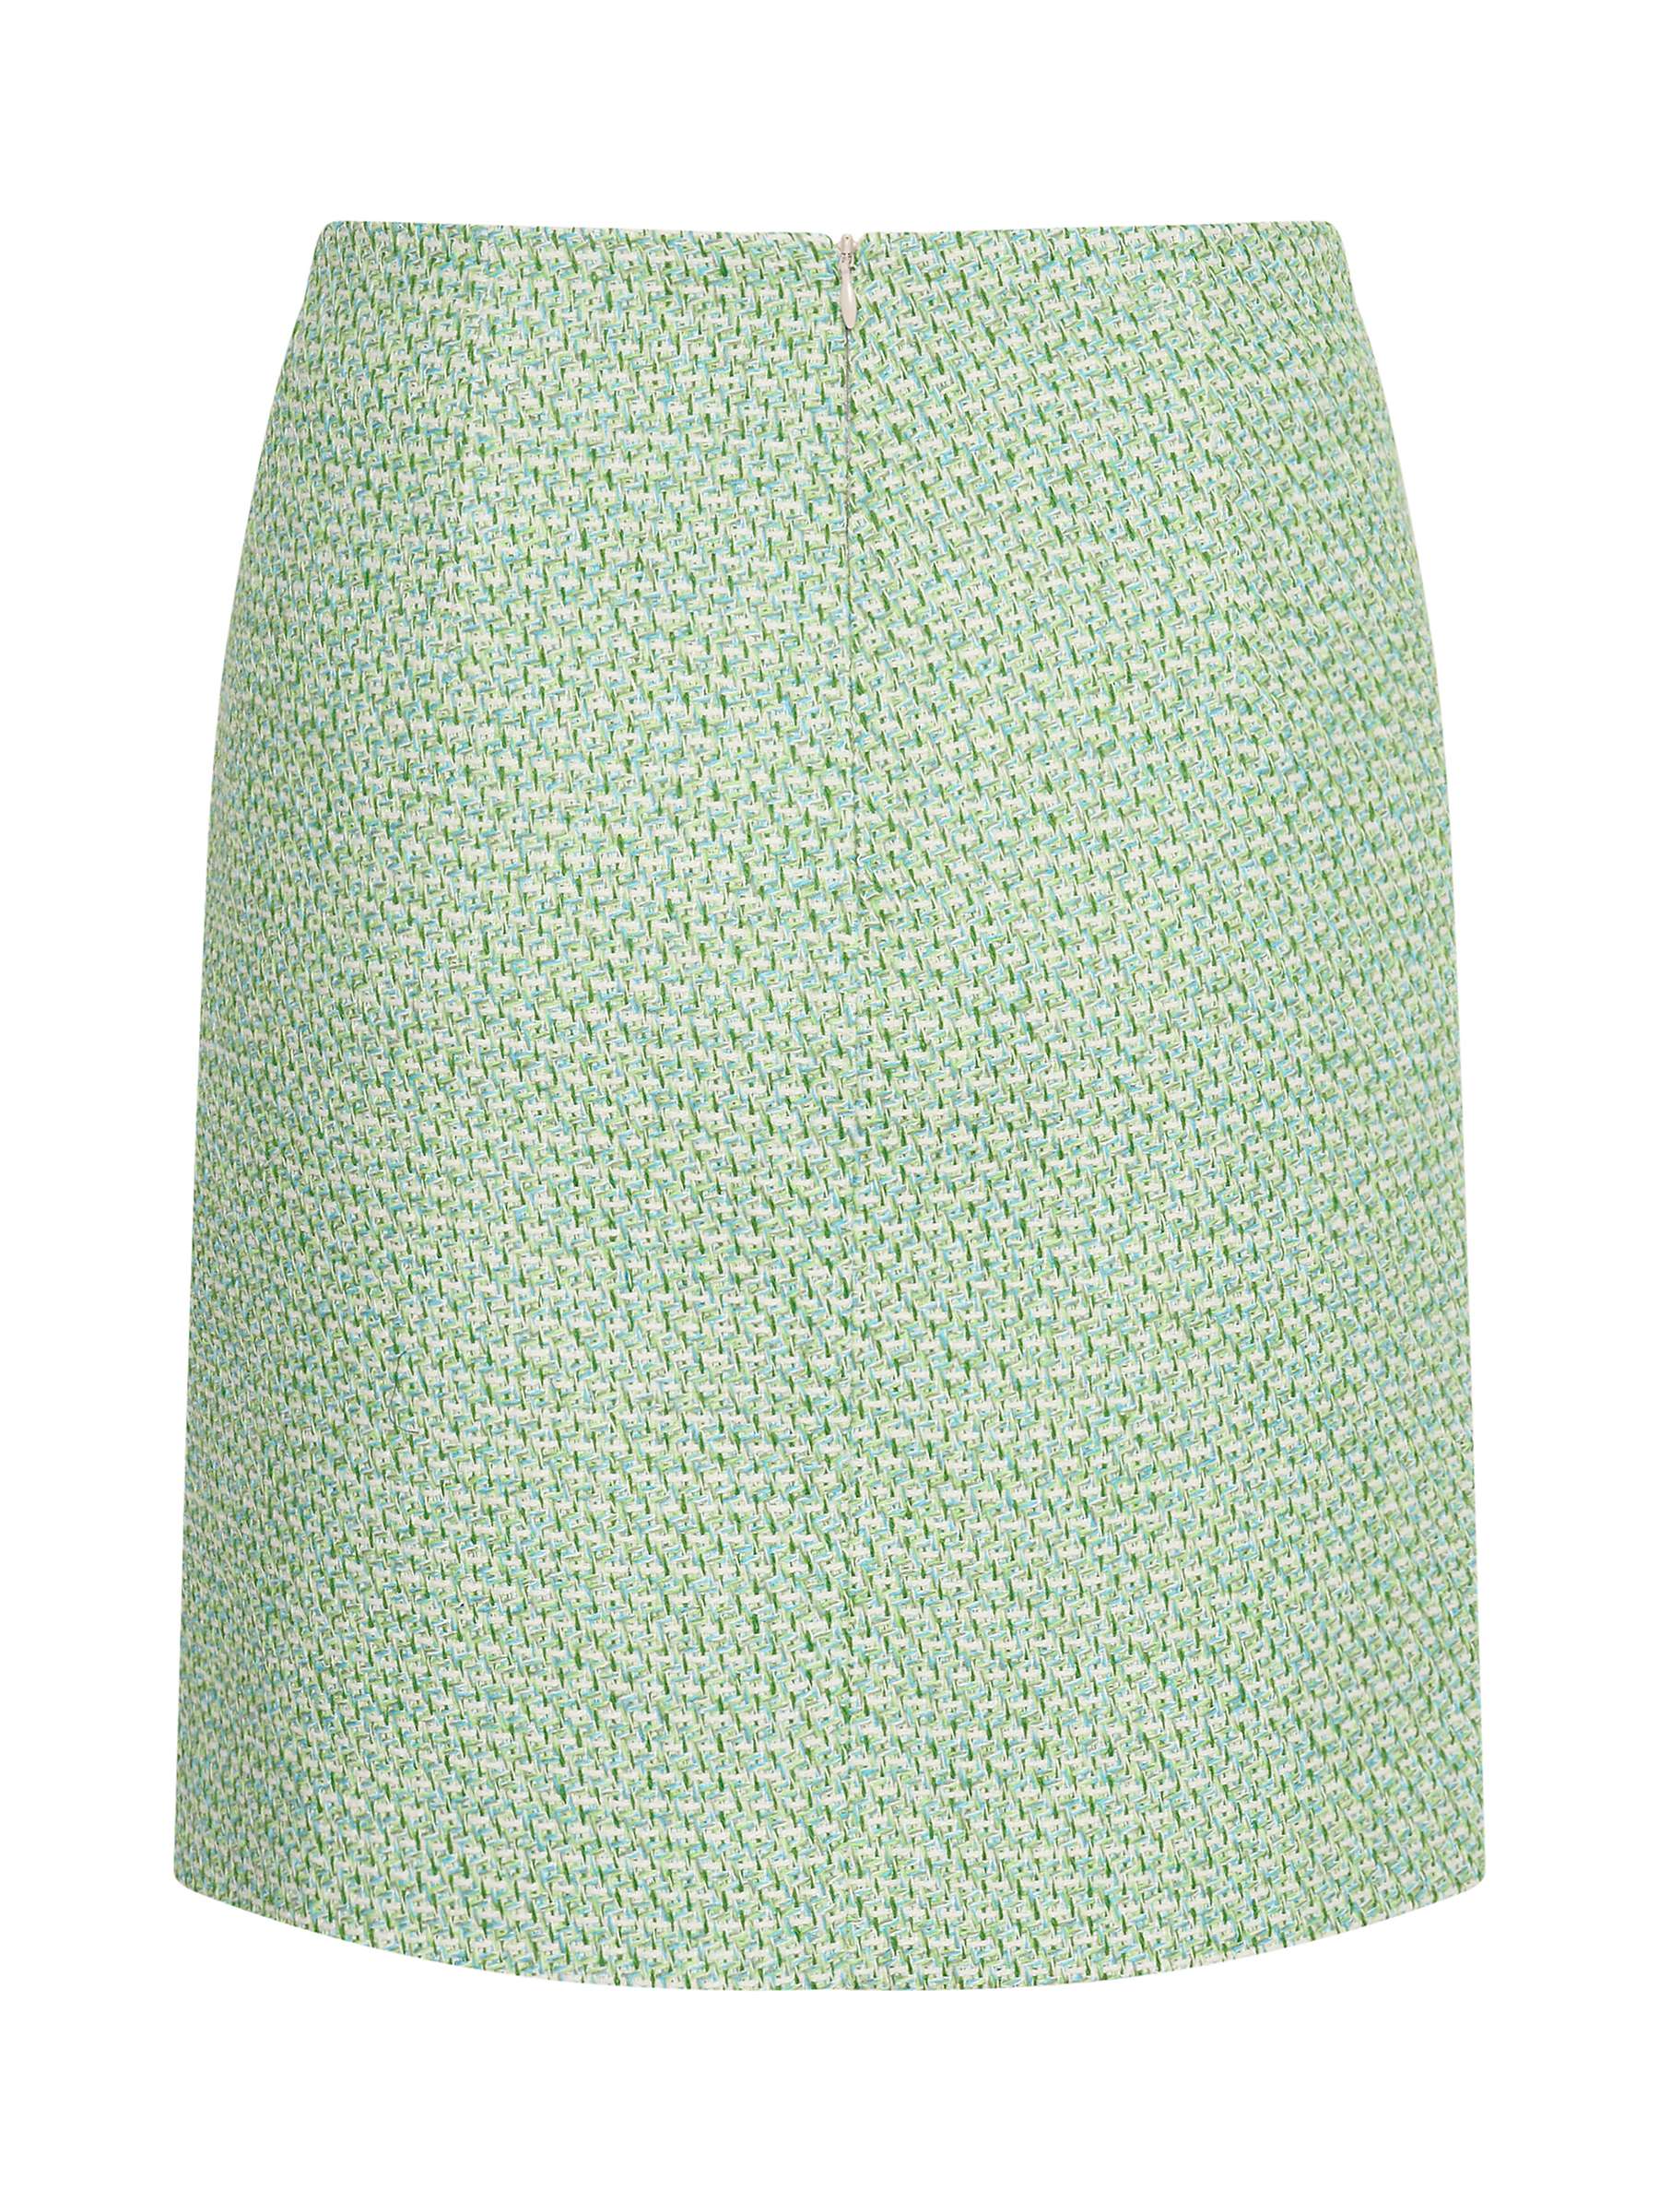 Buy InWear Titan Tweed Pencil Mini Skirt, Green Online at johnlewis.com